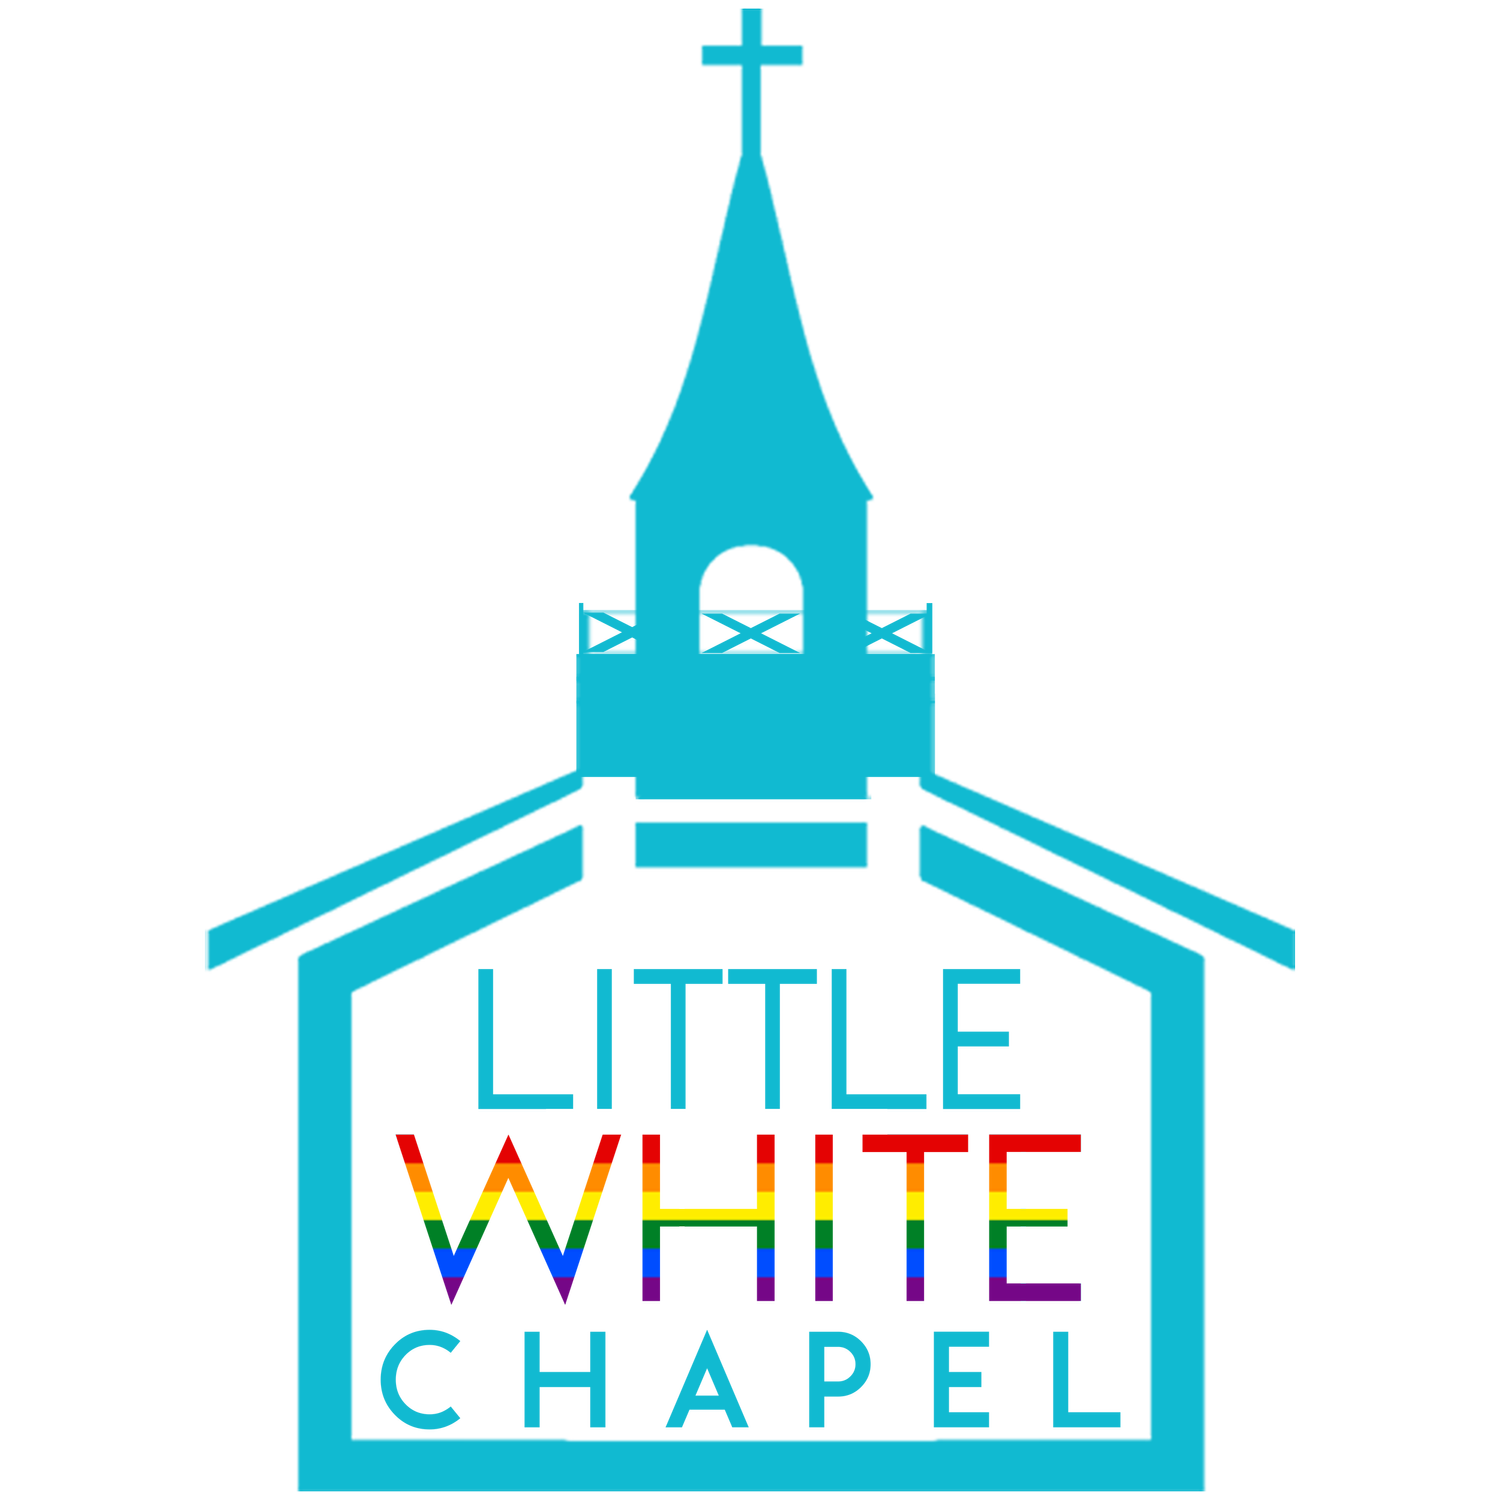 Little White Chapel